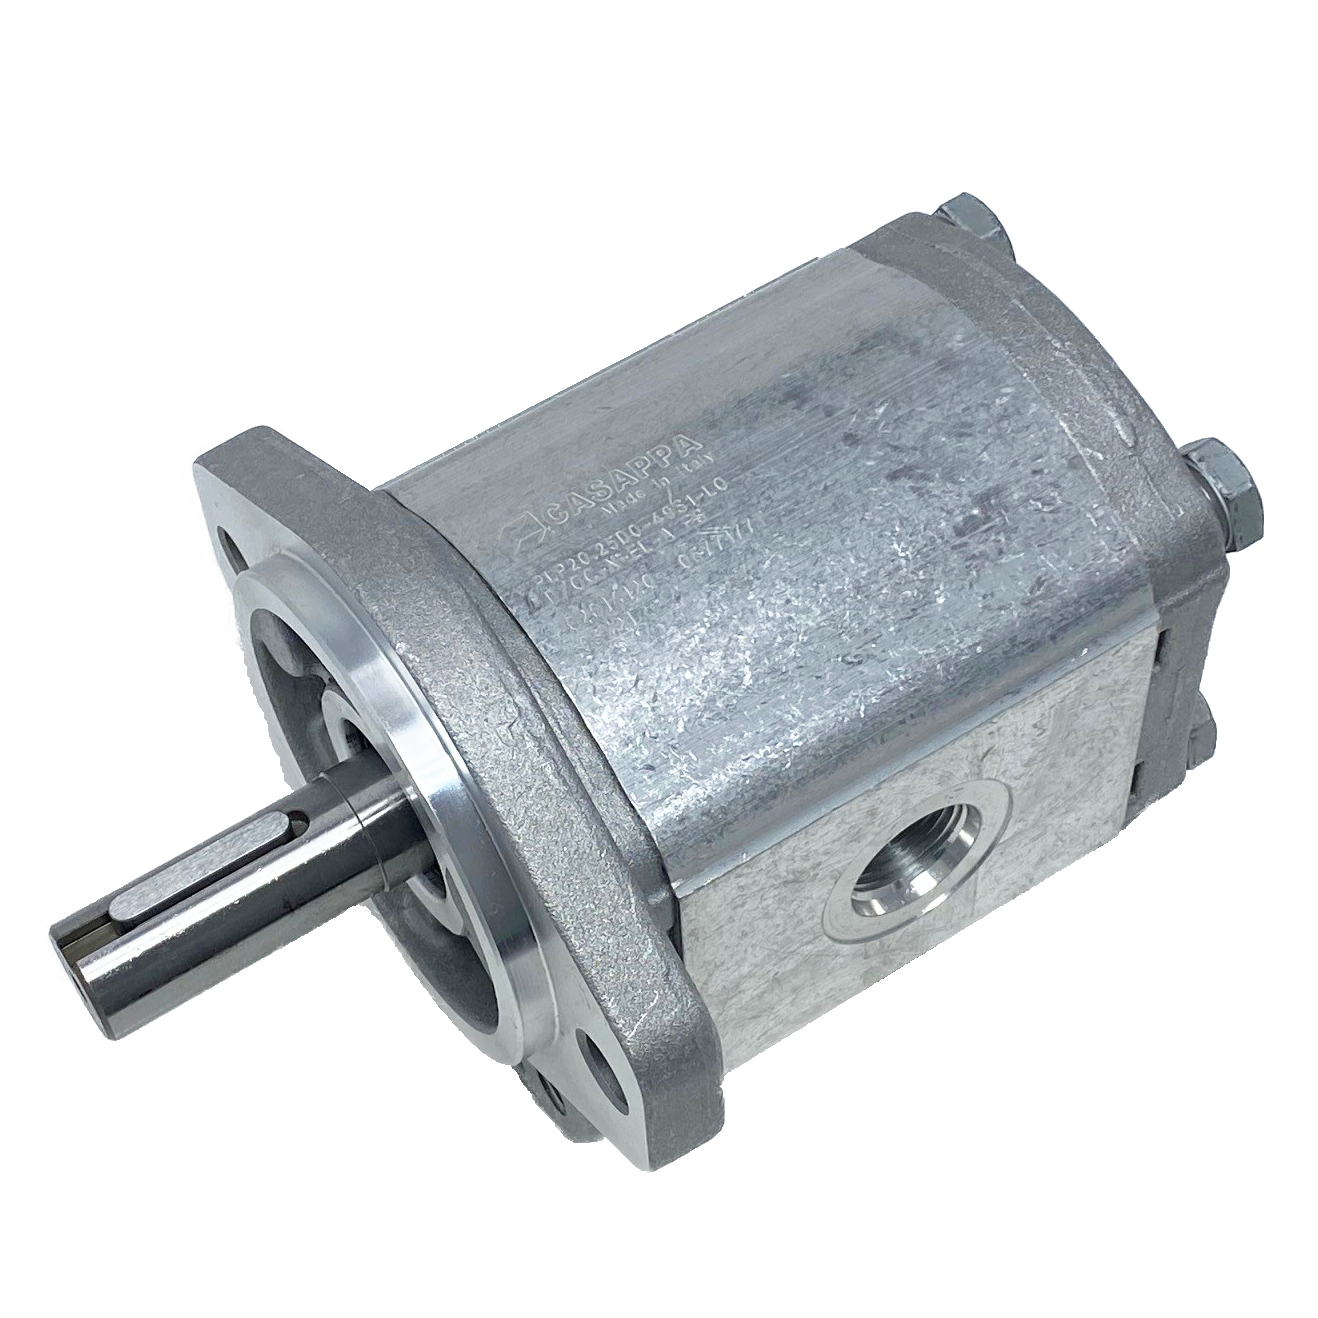 PHP20.31,5D0-49S9-LOG/OC-N-EL : Casappa Polaris Gear Pump, 33.03cc, 2900psi Rated, 2500RPM, CW, 3/4" Bore x 3/16" Key Shaft, SAE A 2-Bolt Flange, 1.25" #20 SAE Inlet, 0.625 (5/8") #10 SAE Outlet, Cast Iron Body, Aluminum Flange